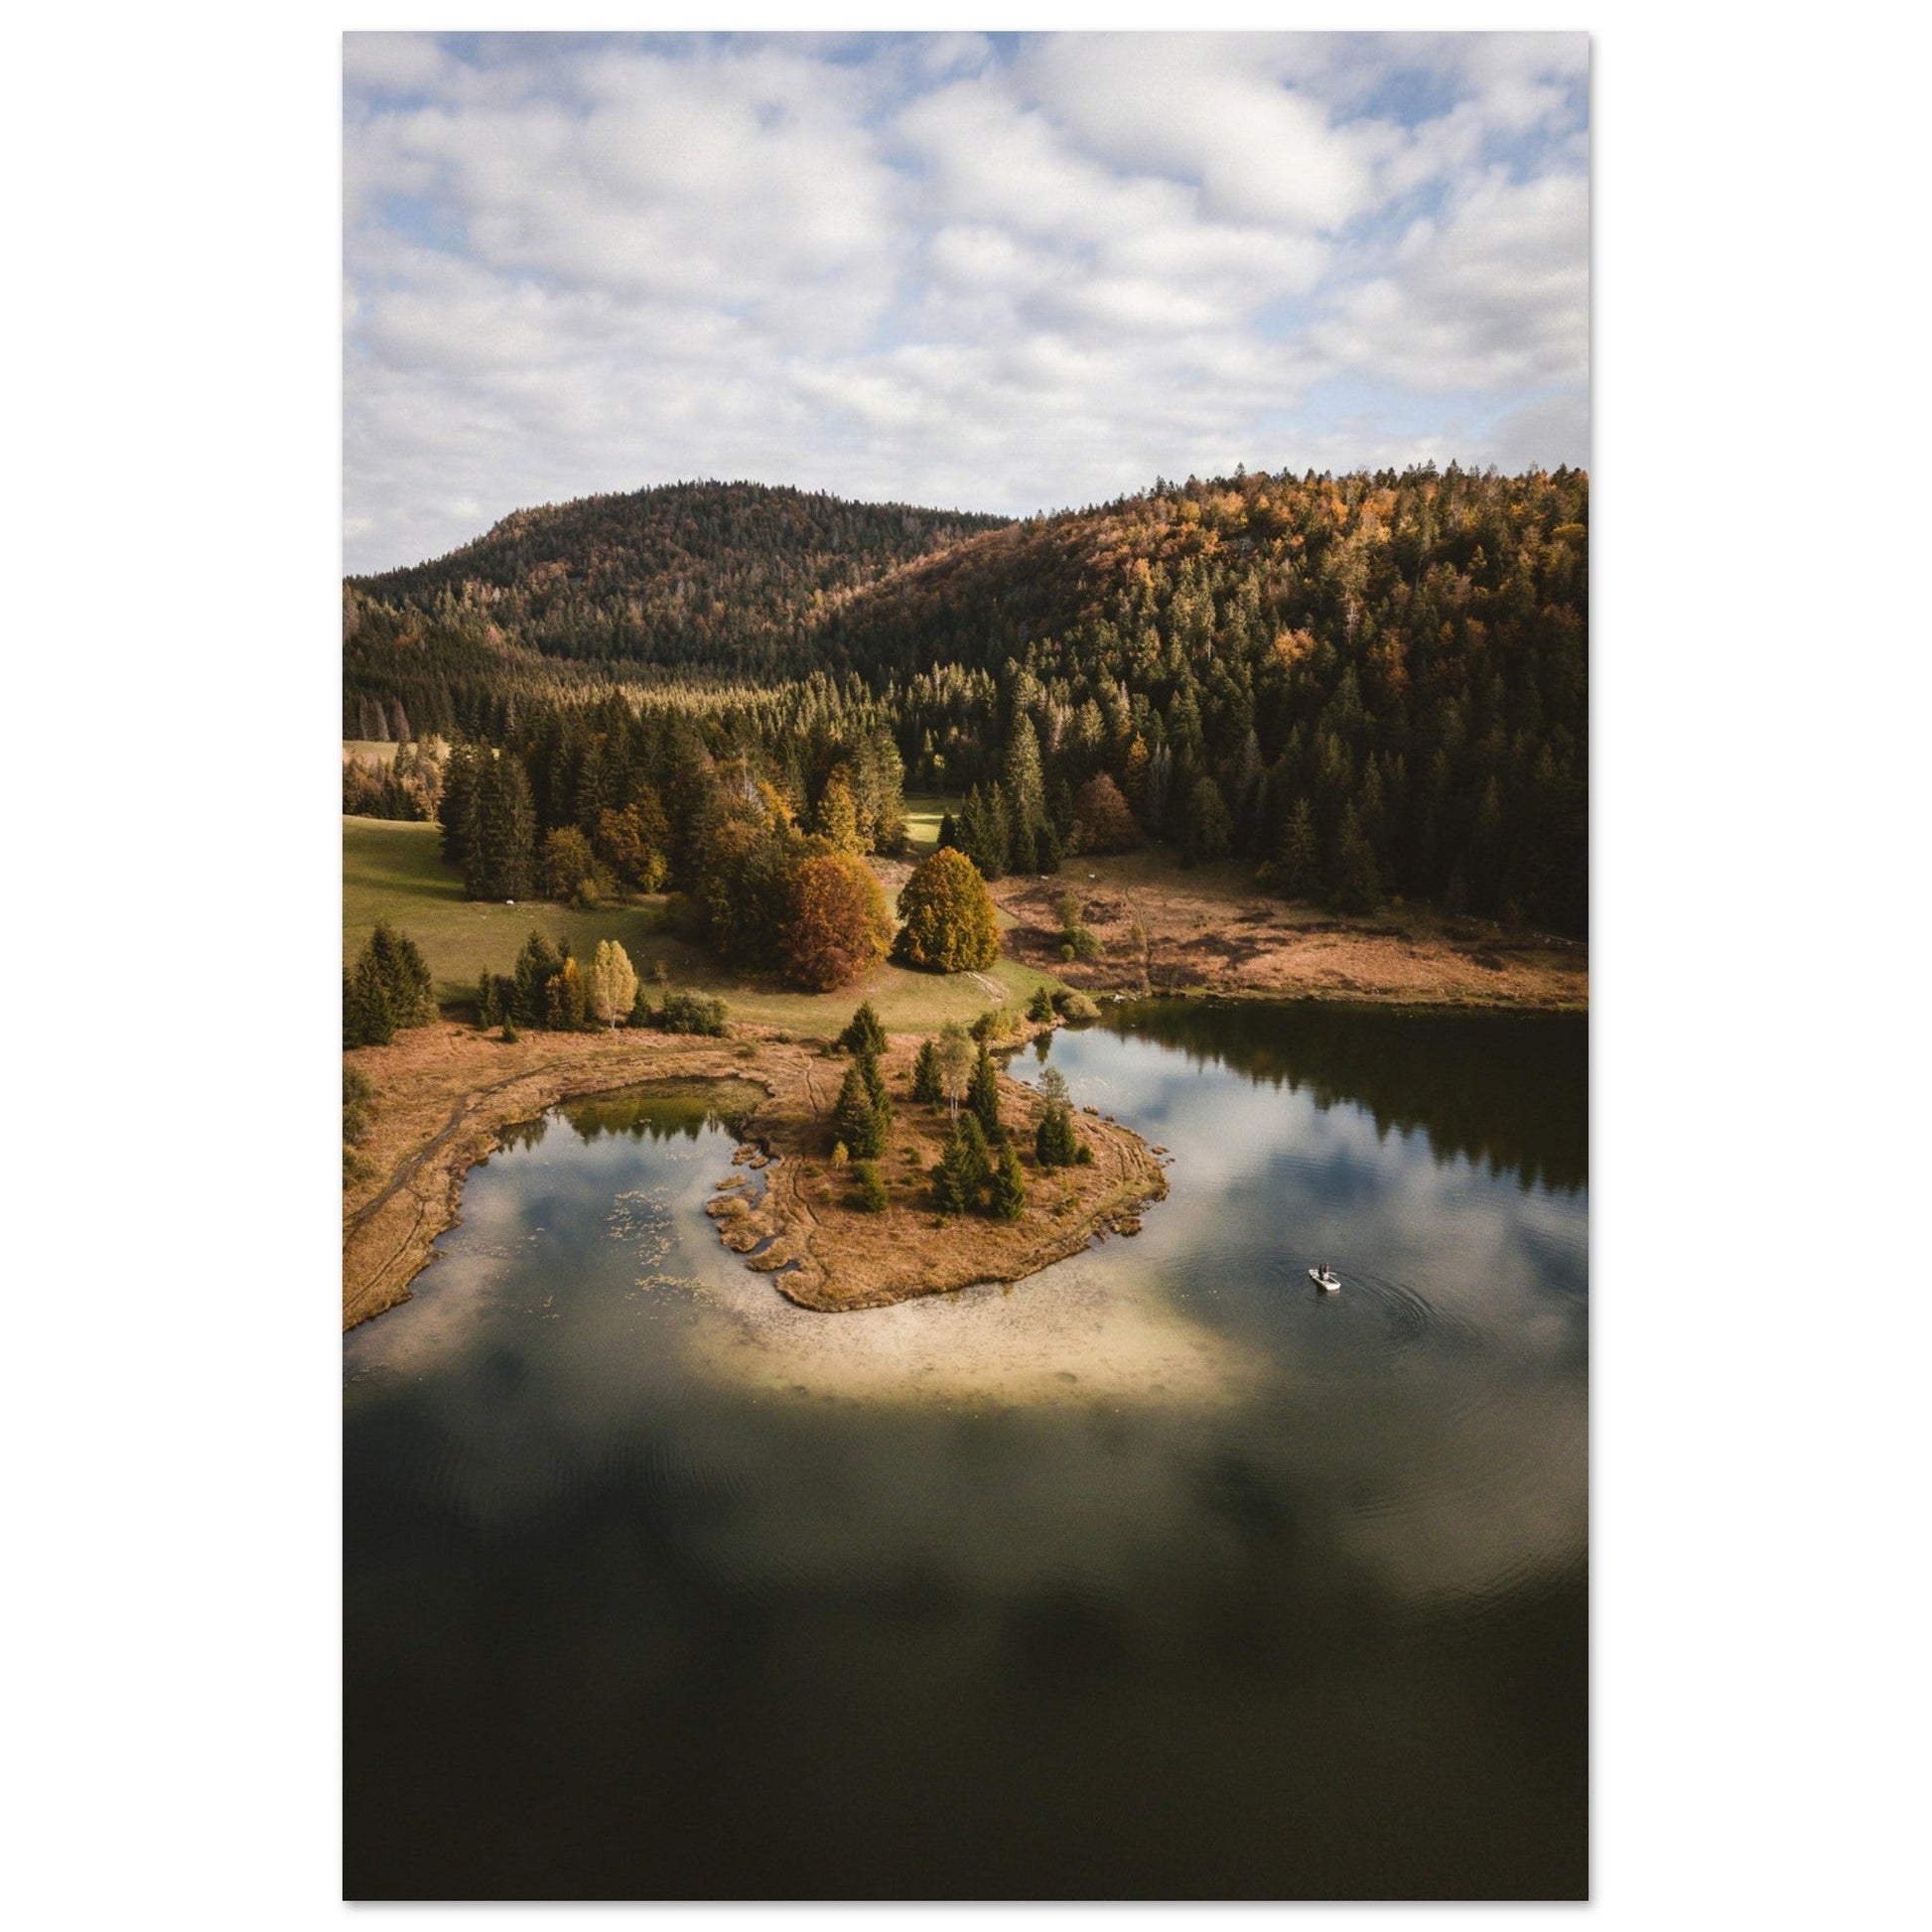 Vente Photo du lac Genin en automne, Jura #1 - Tableau photo alu montagne